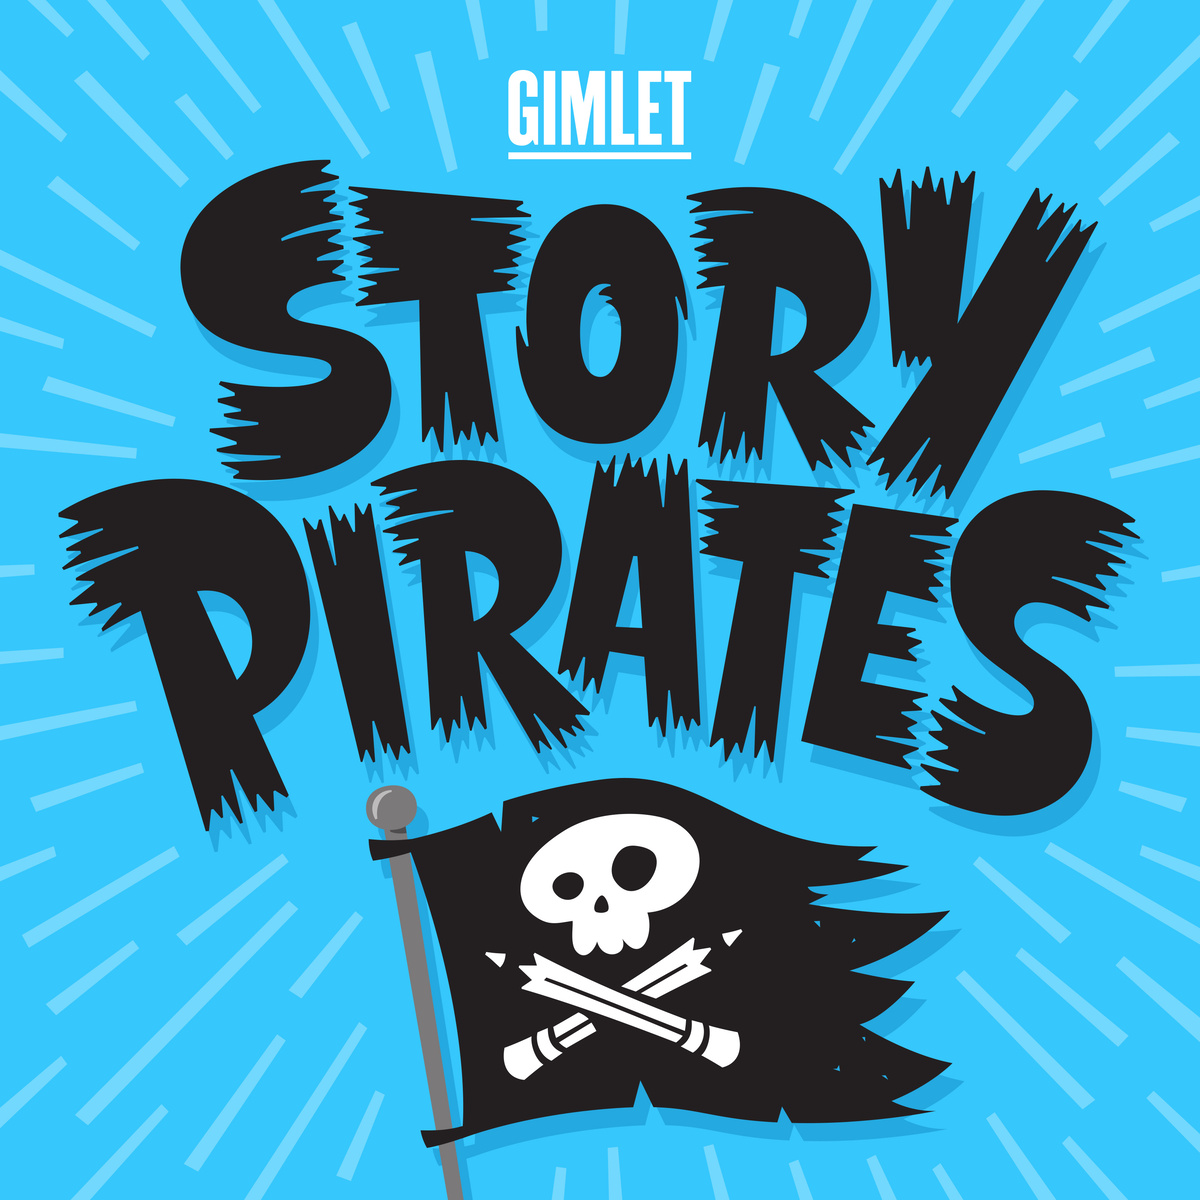 Story Pirates Gimlet